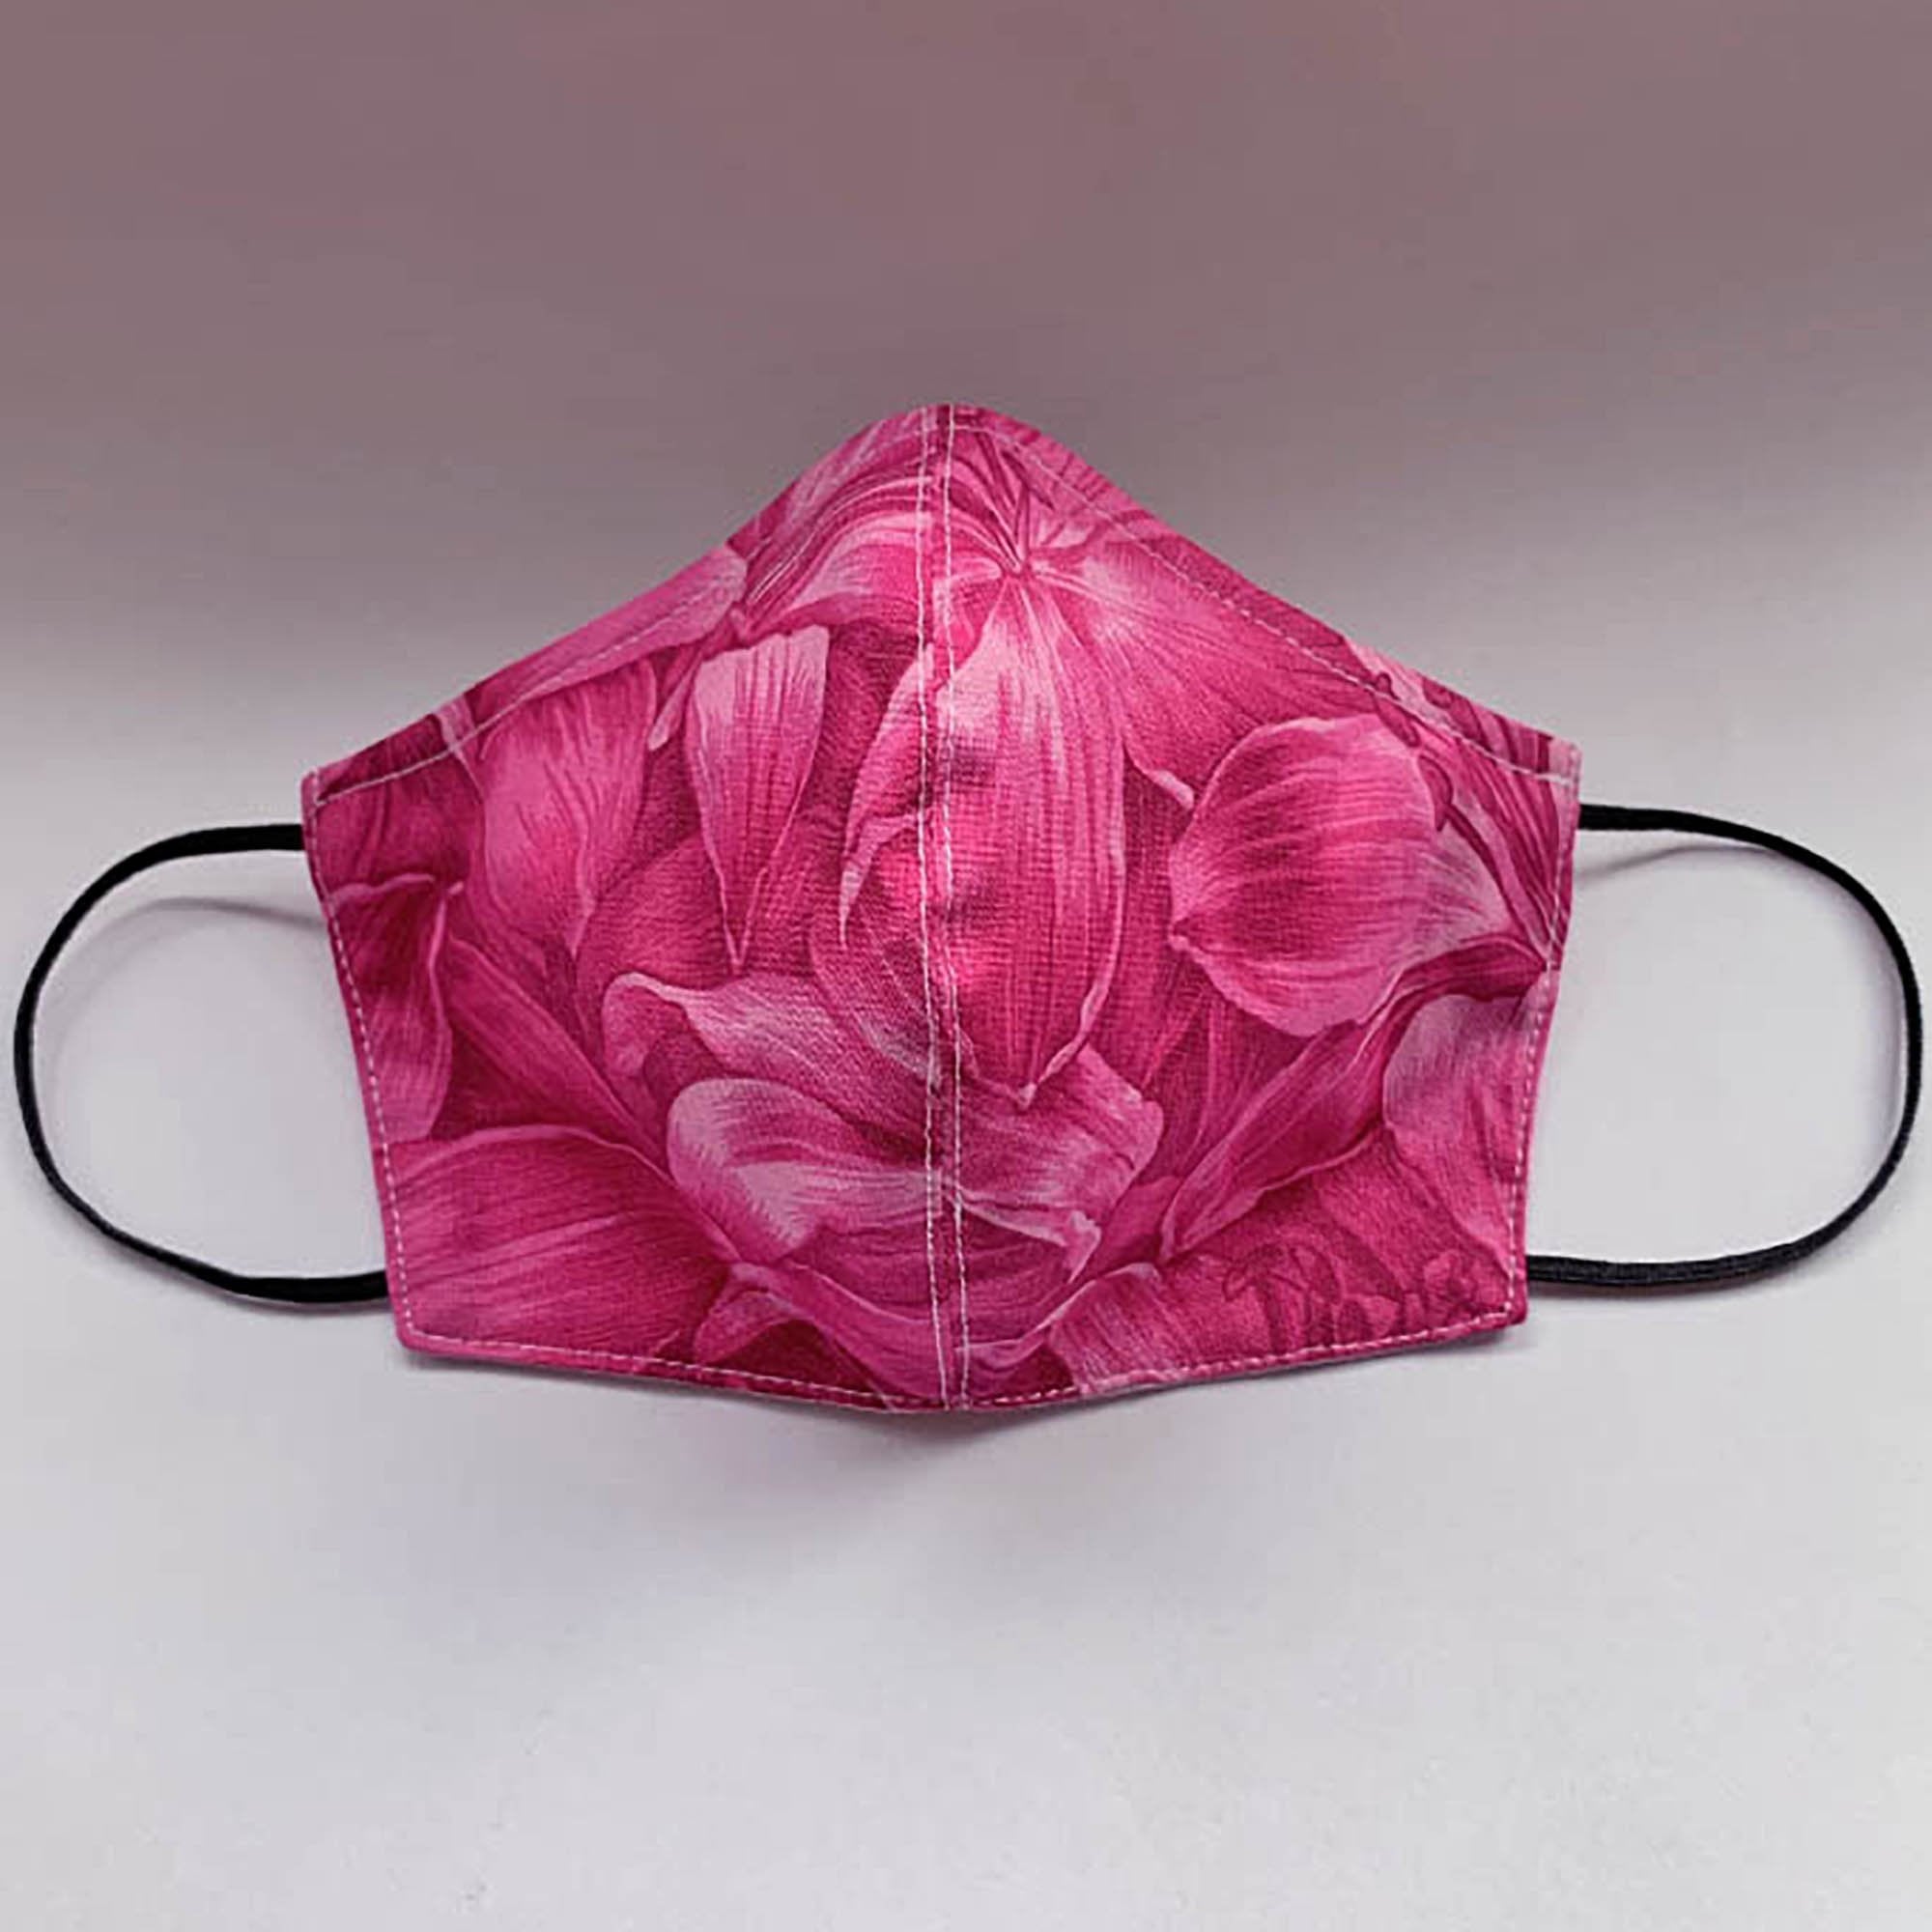 Fashionizer Spa Uniforms Pink Hawaiian Floral Fashion Face Mask S/M